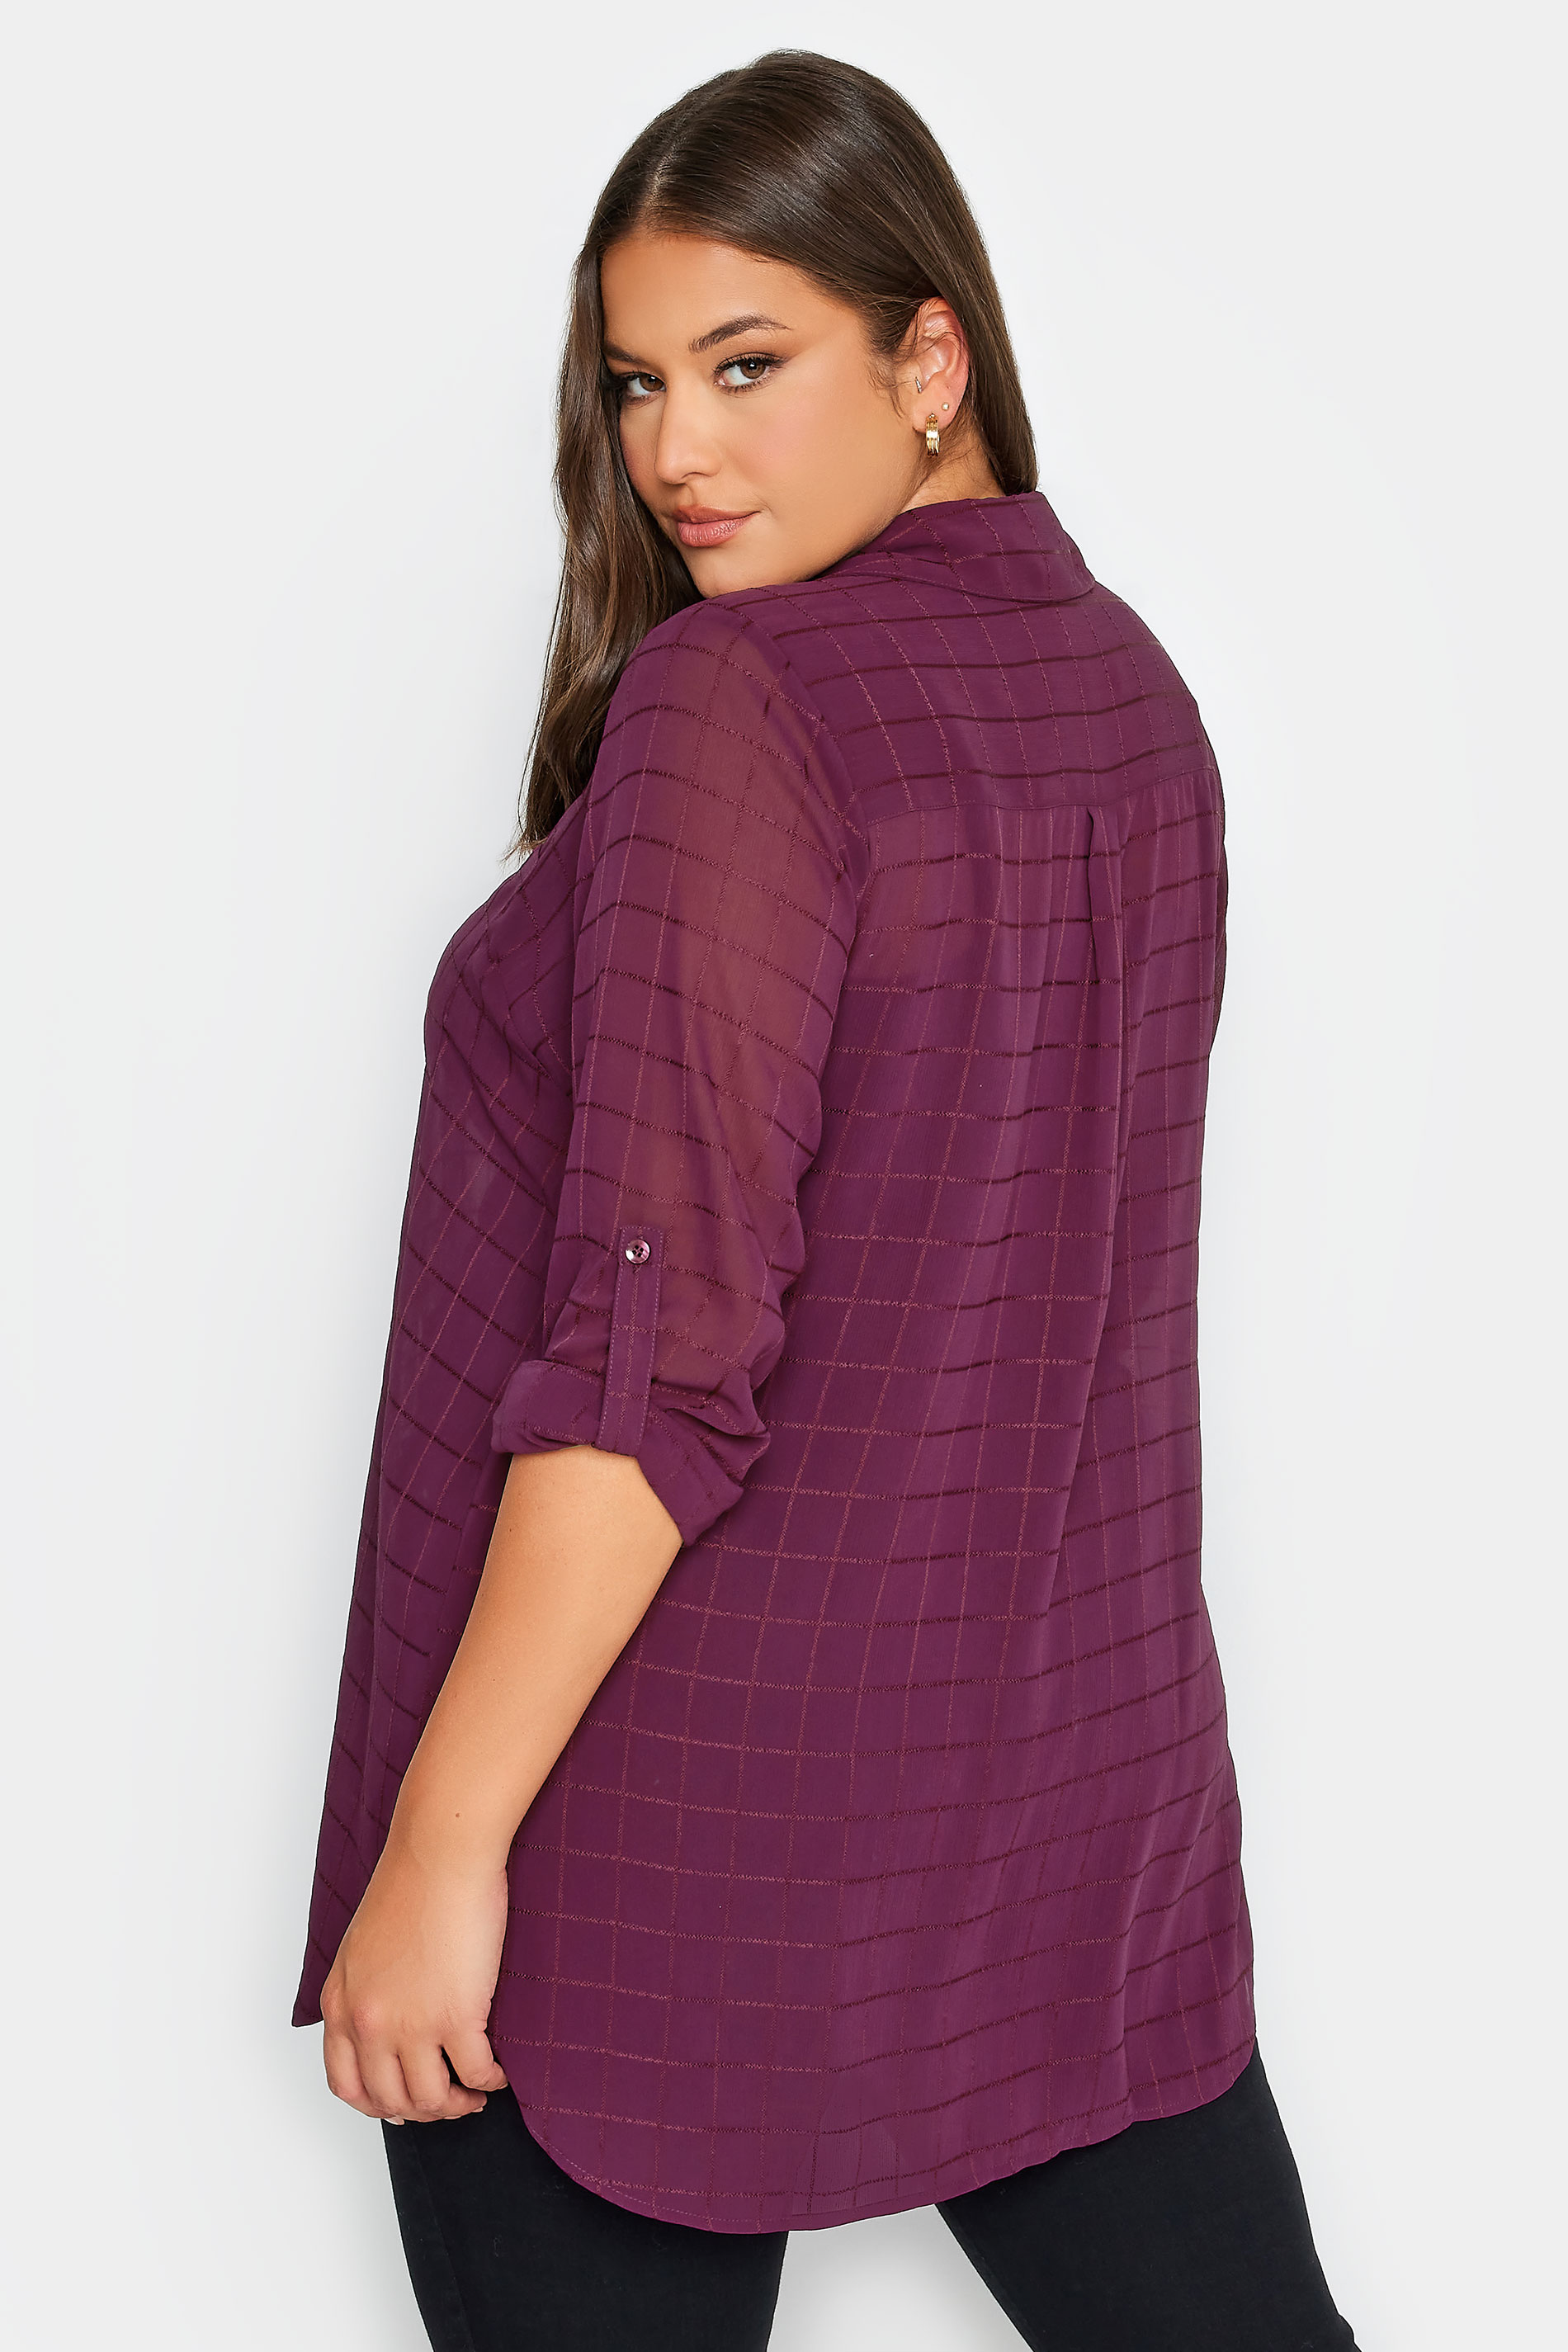 YOURS LONDON Plus Size Purple Check Chiffon Shirt | Yours Clothing 3